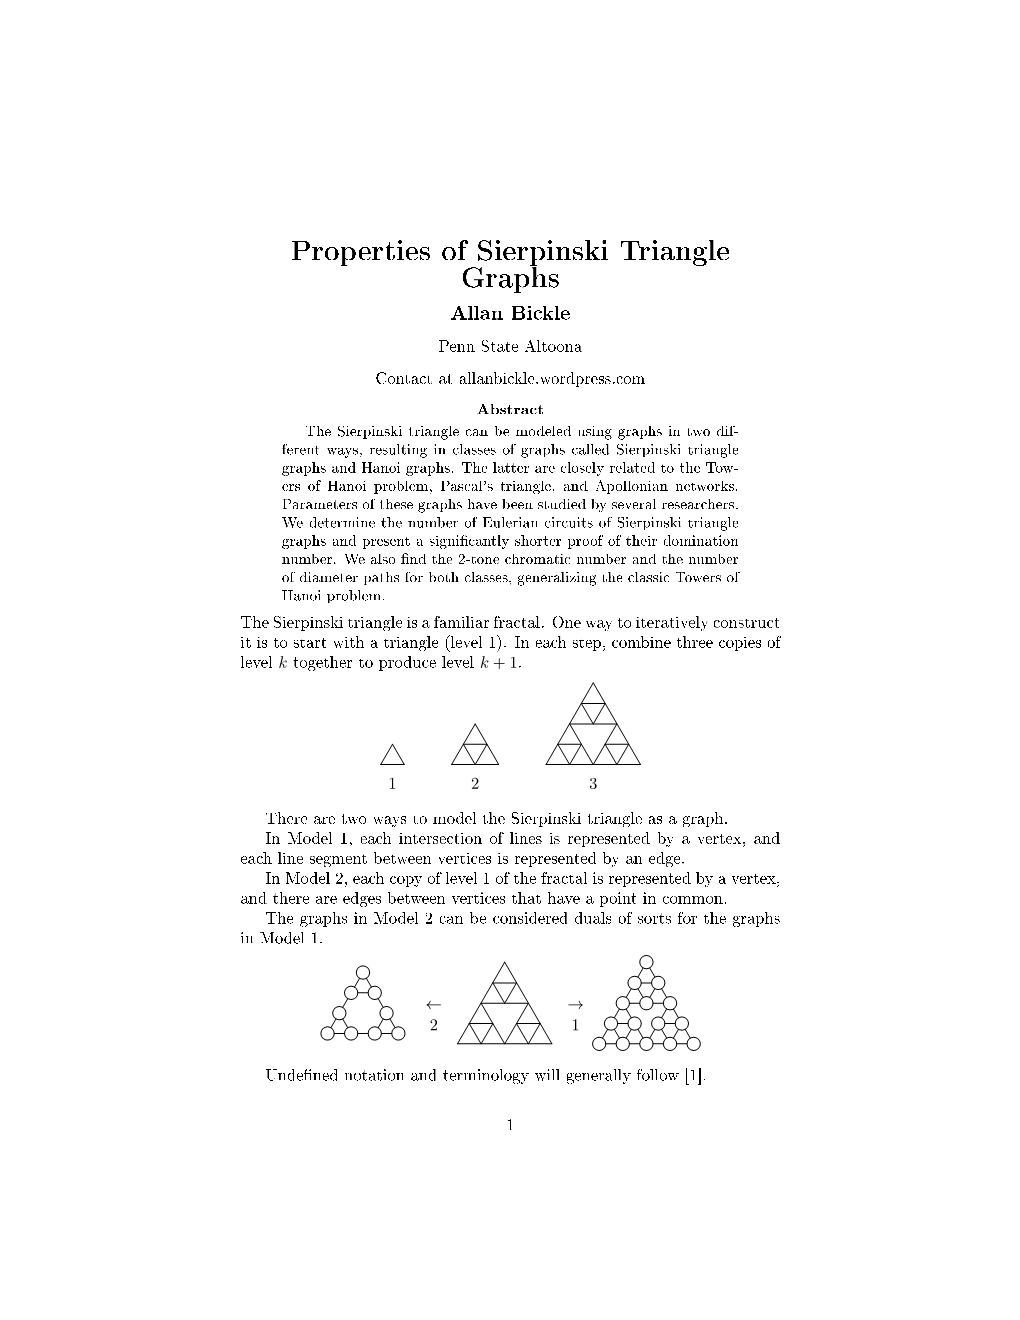 Properties of Sierpinski Triangle Graphs Allan Bickle Penn State Altoona Contact at Allanbickle.Wordpress.Com